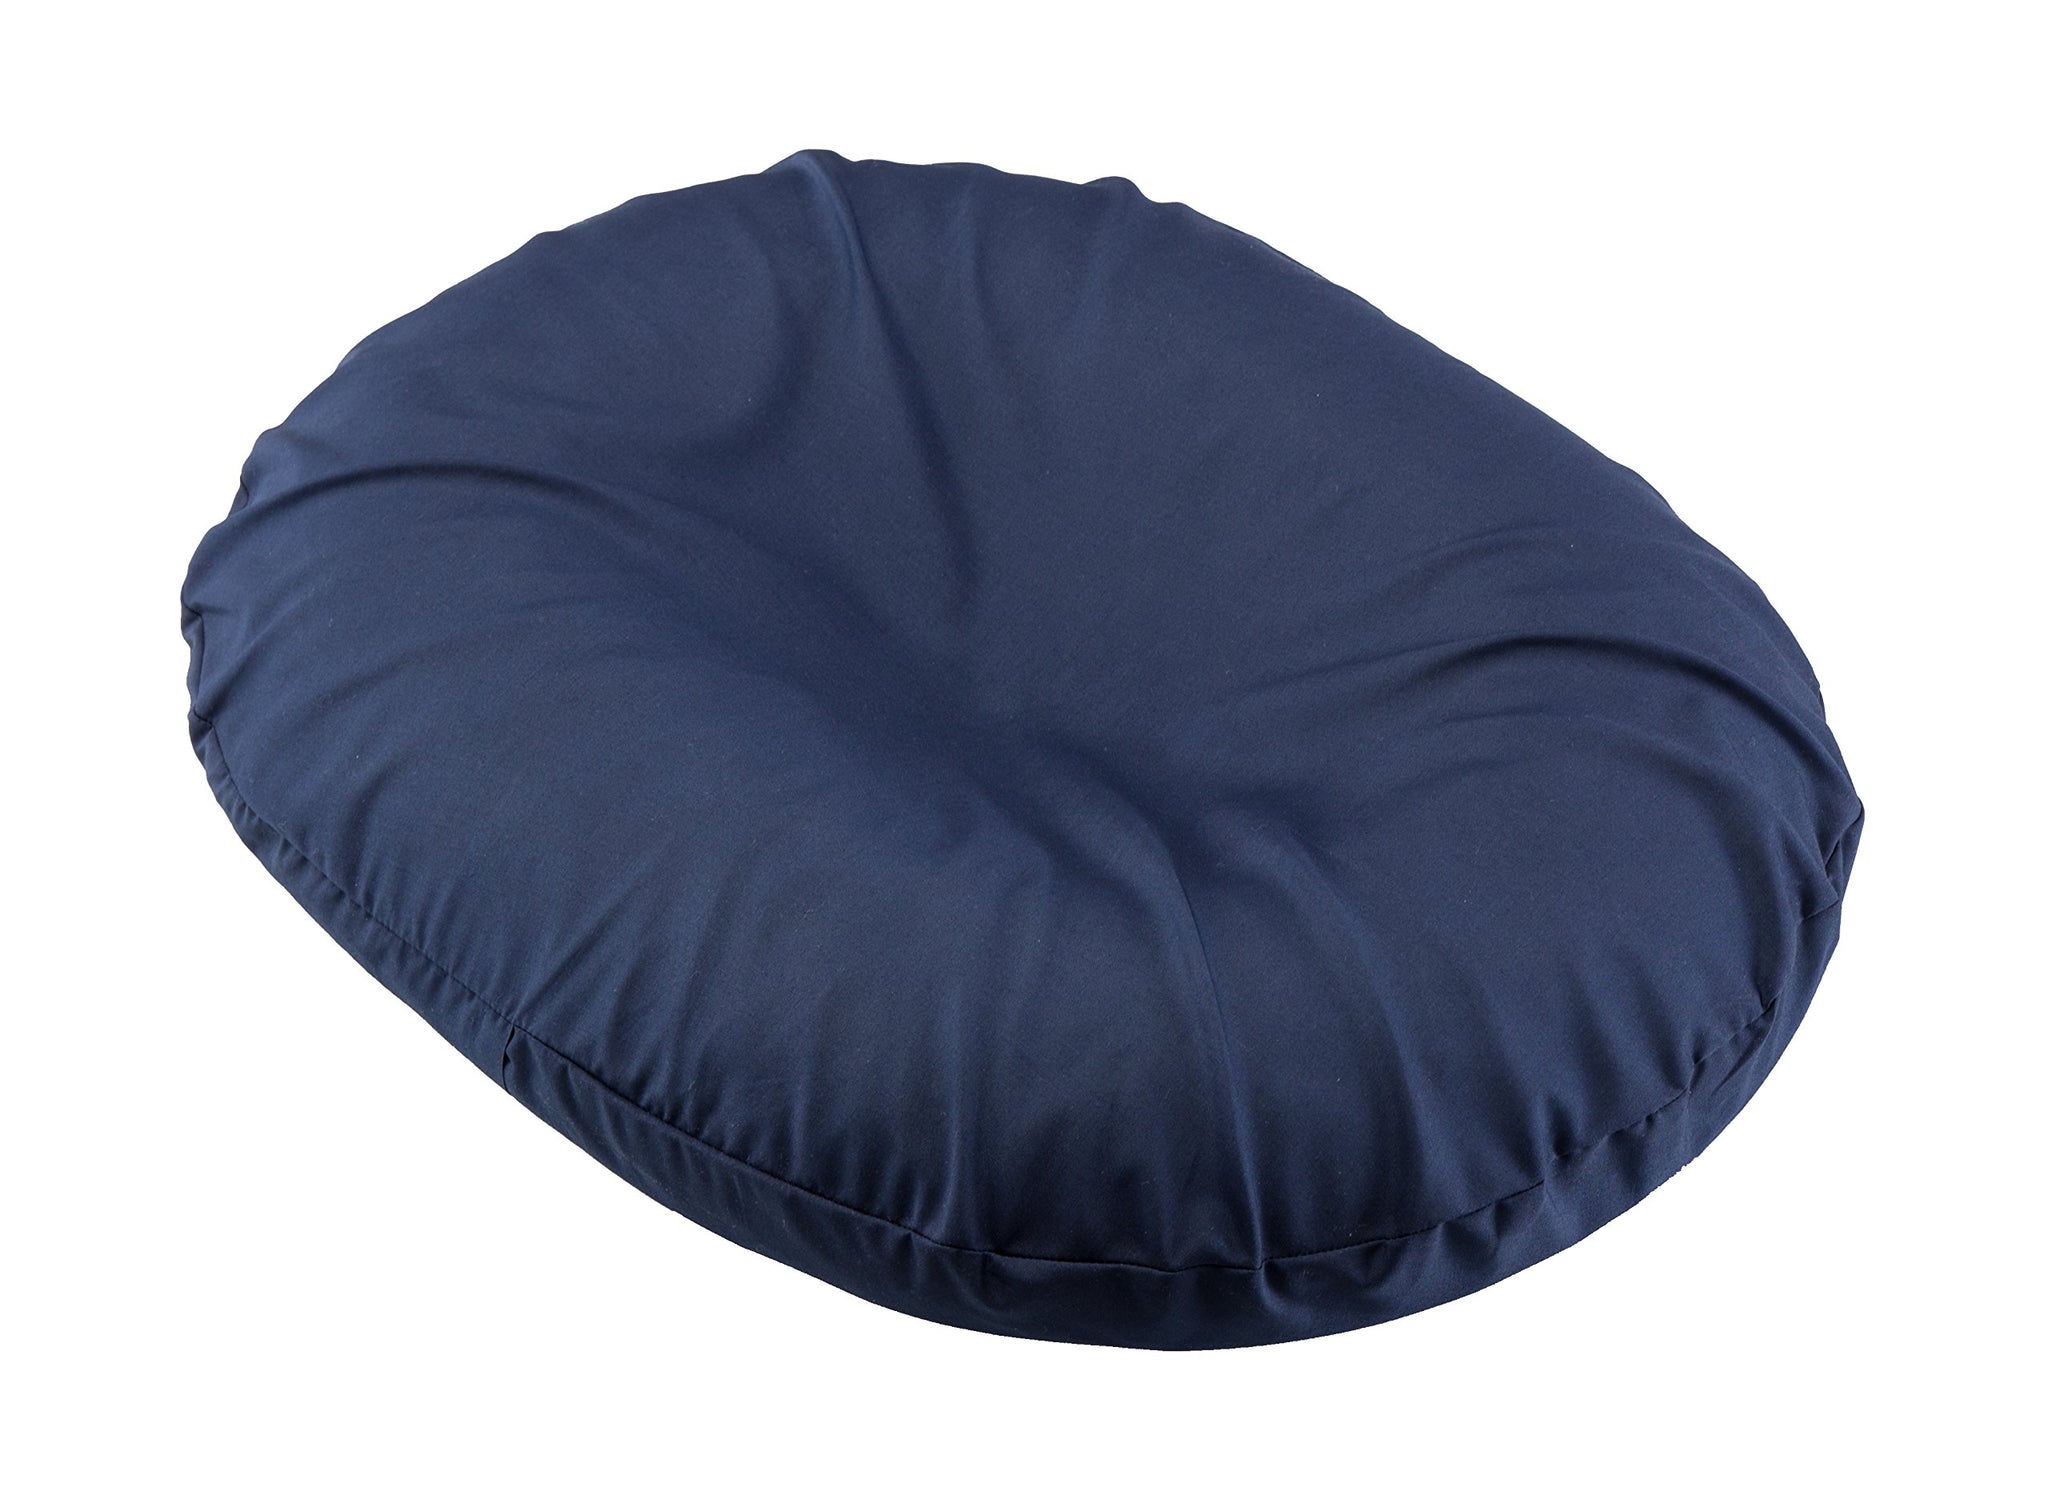 BodyHealt Donut Seat Ring Cushion Comfort Pillow for Hemorrhoids